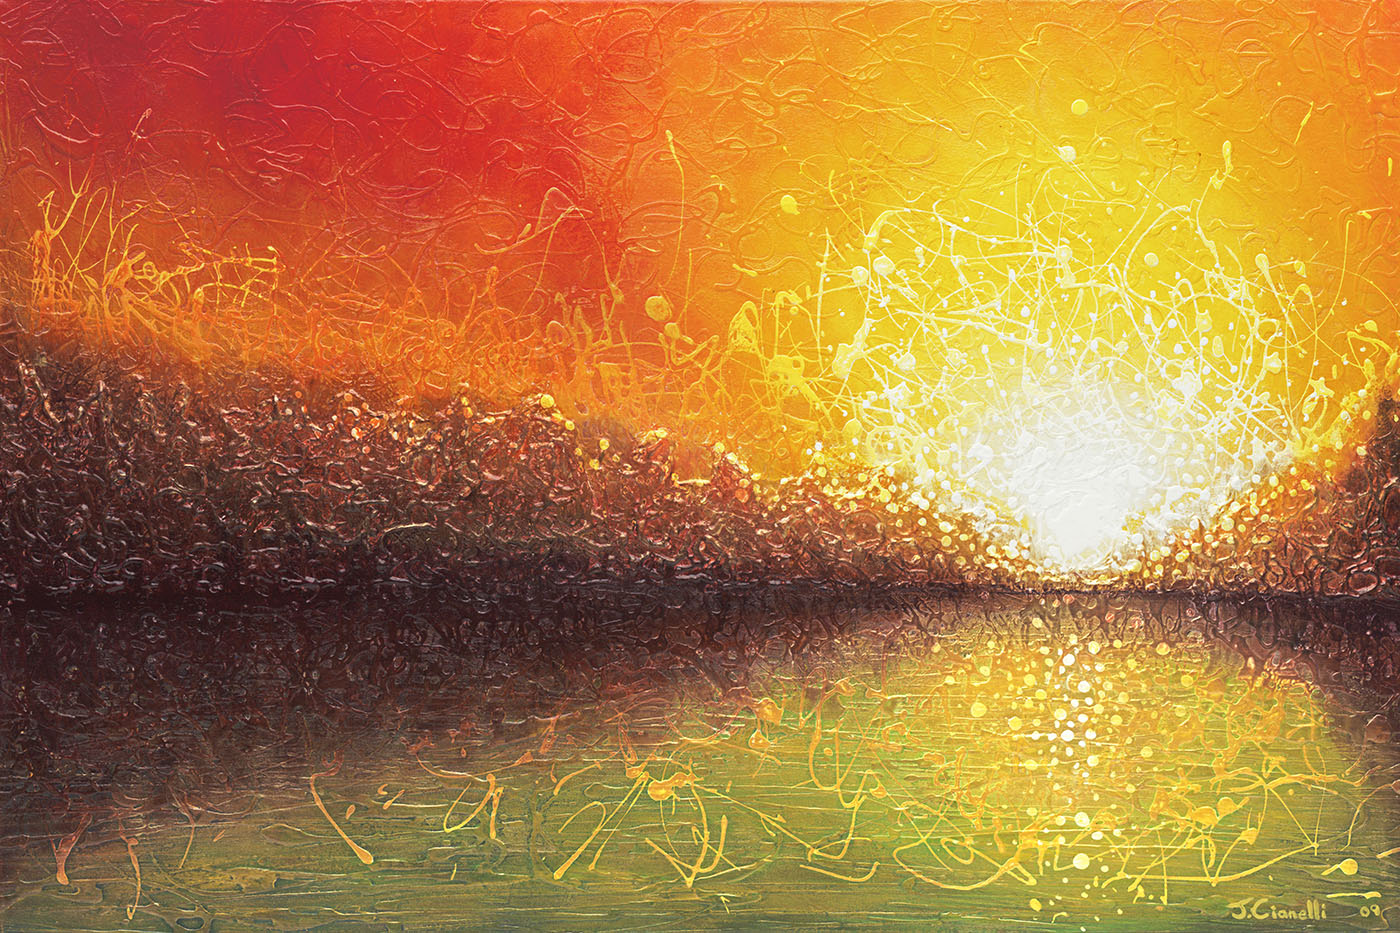 Bursting Sun Abstract Landscape Painting by Jaison Cianelli.